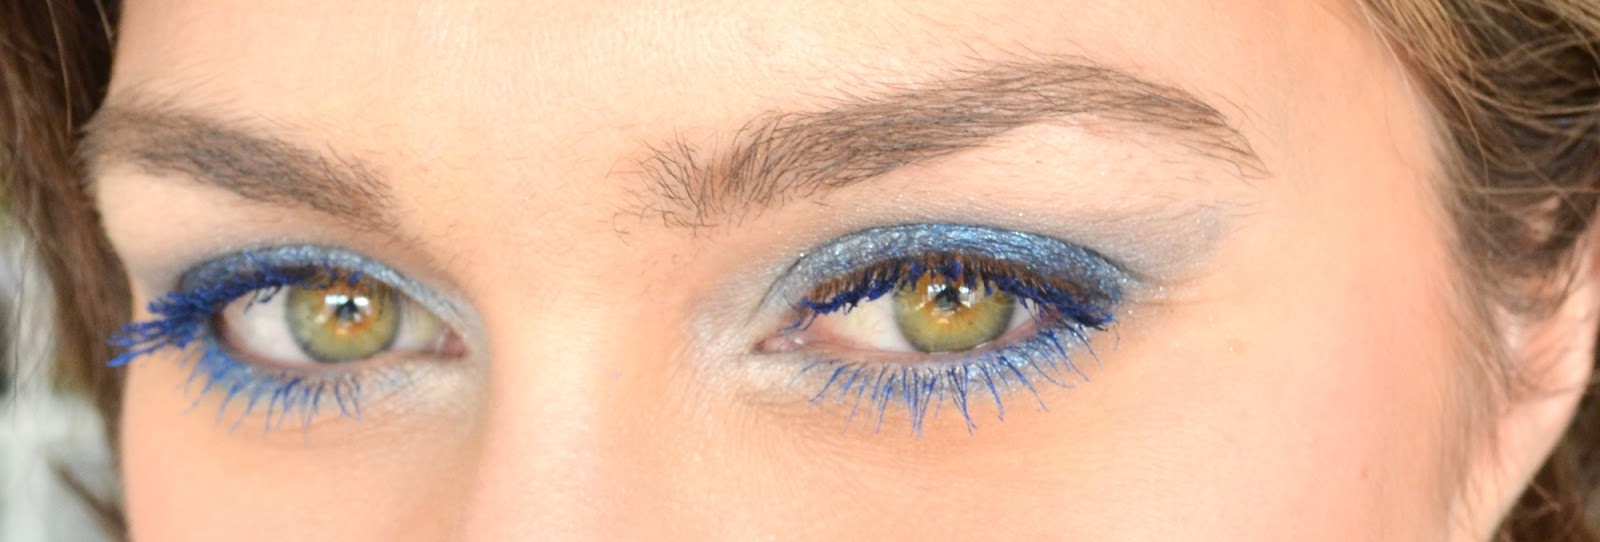 Chanel Stylo Eyeshadow 47 Blue Bay, Inimitable Waterproof Mascara